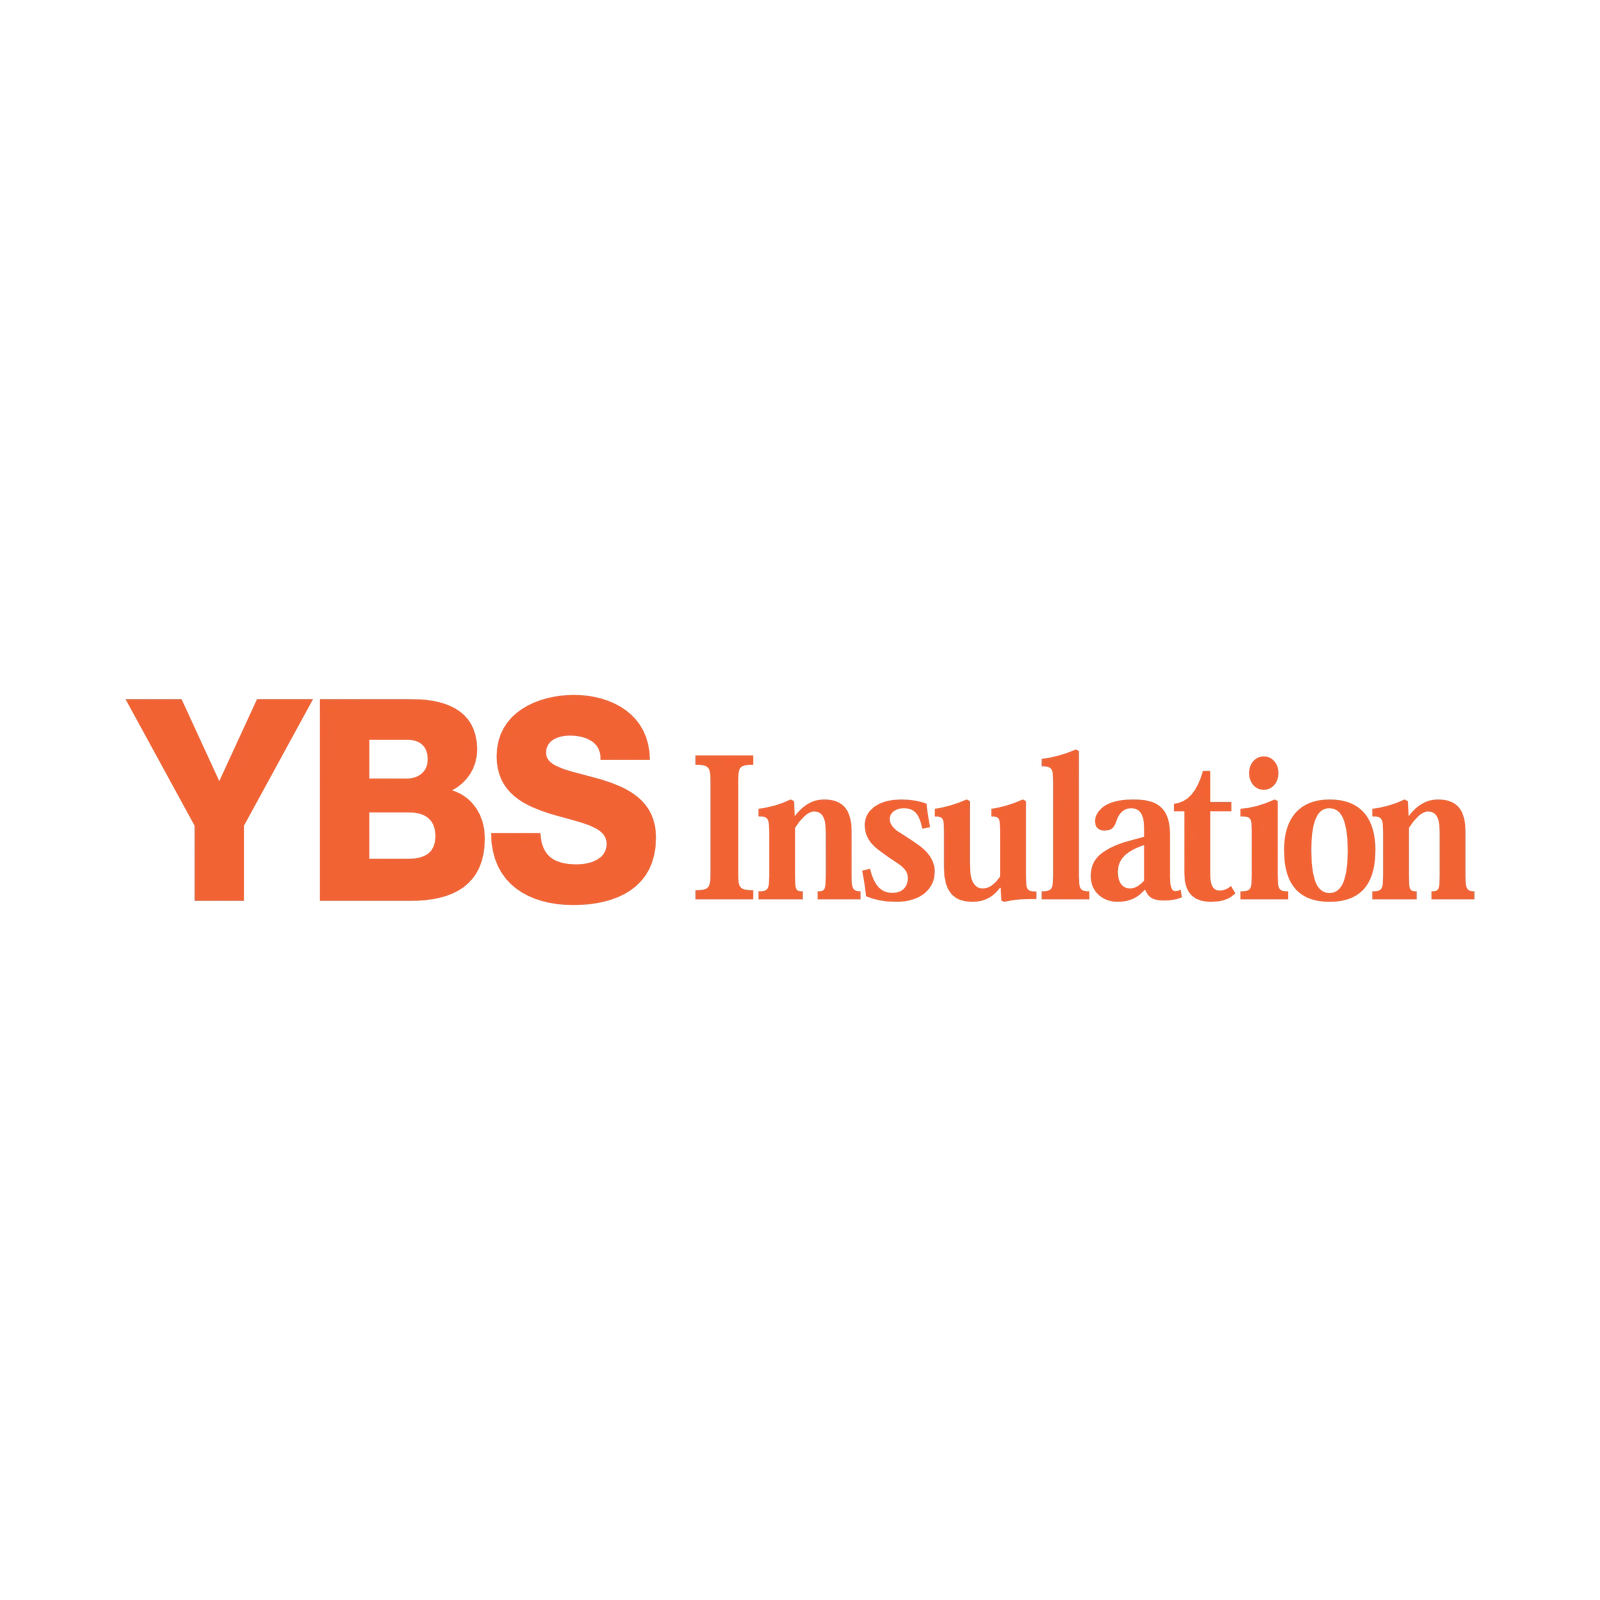 YBS Insulation